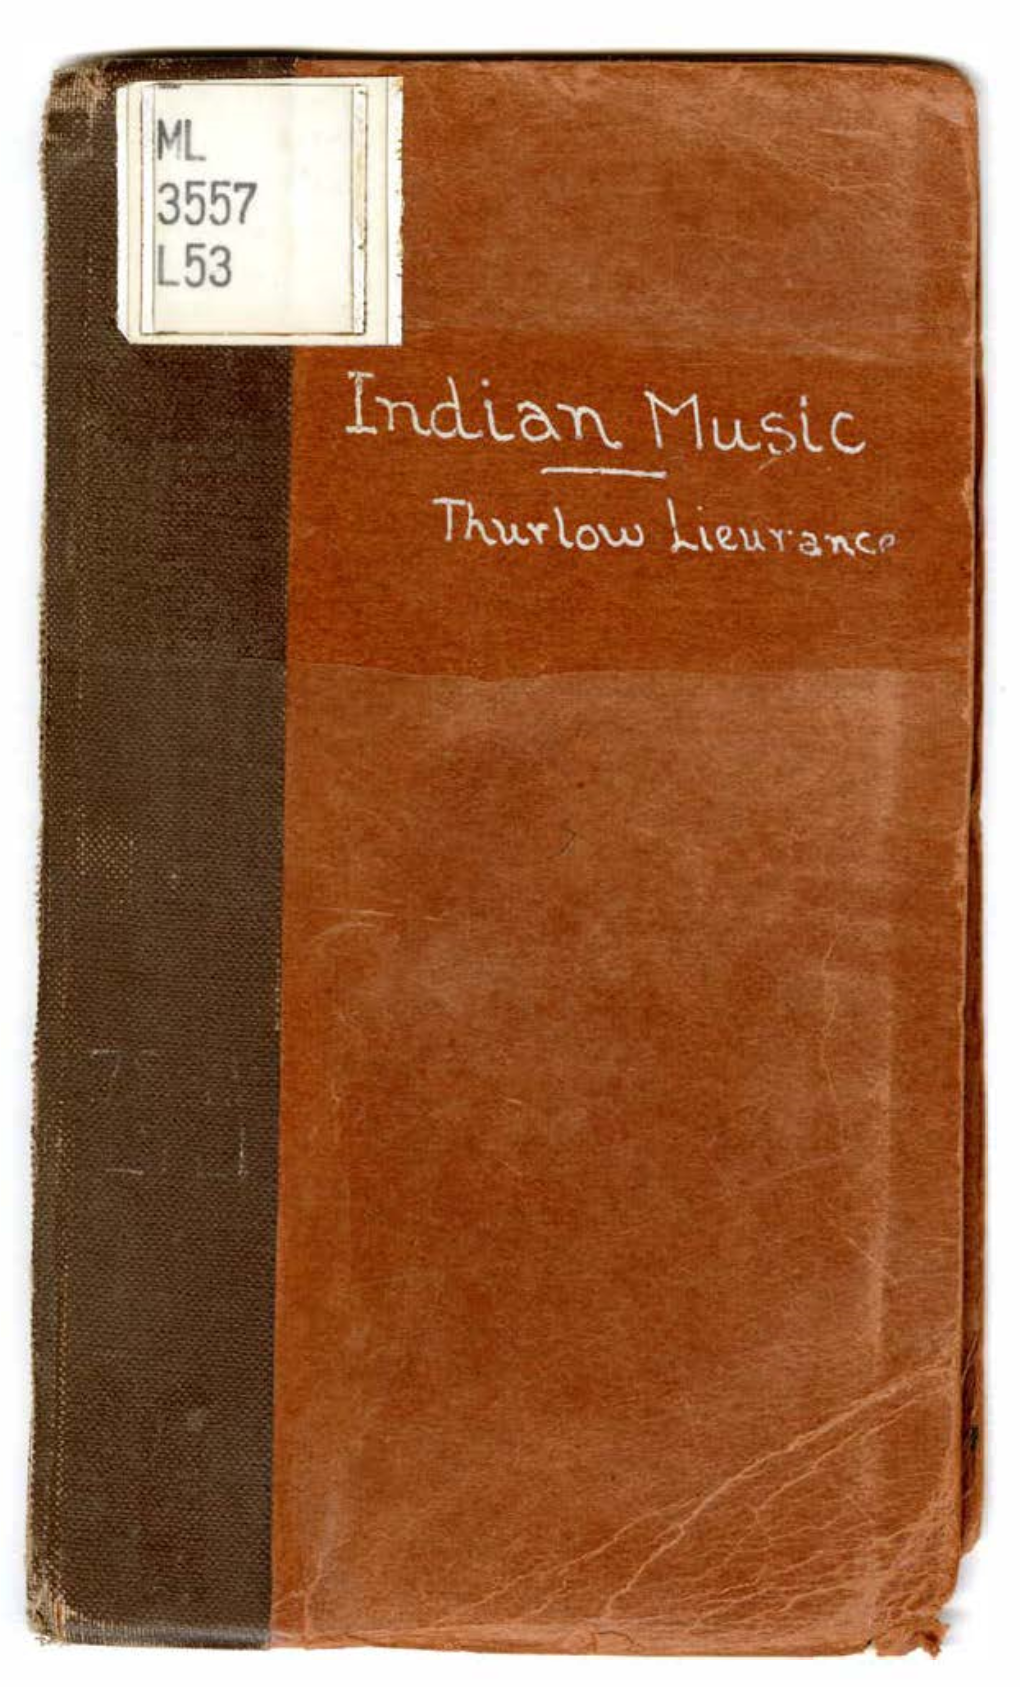 INDIAN MUSIC A02484b